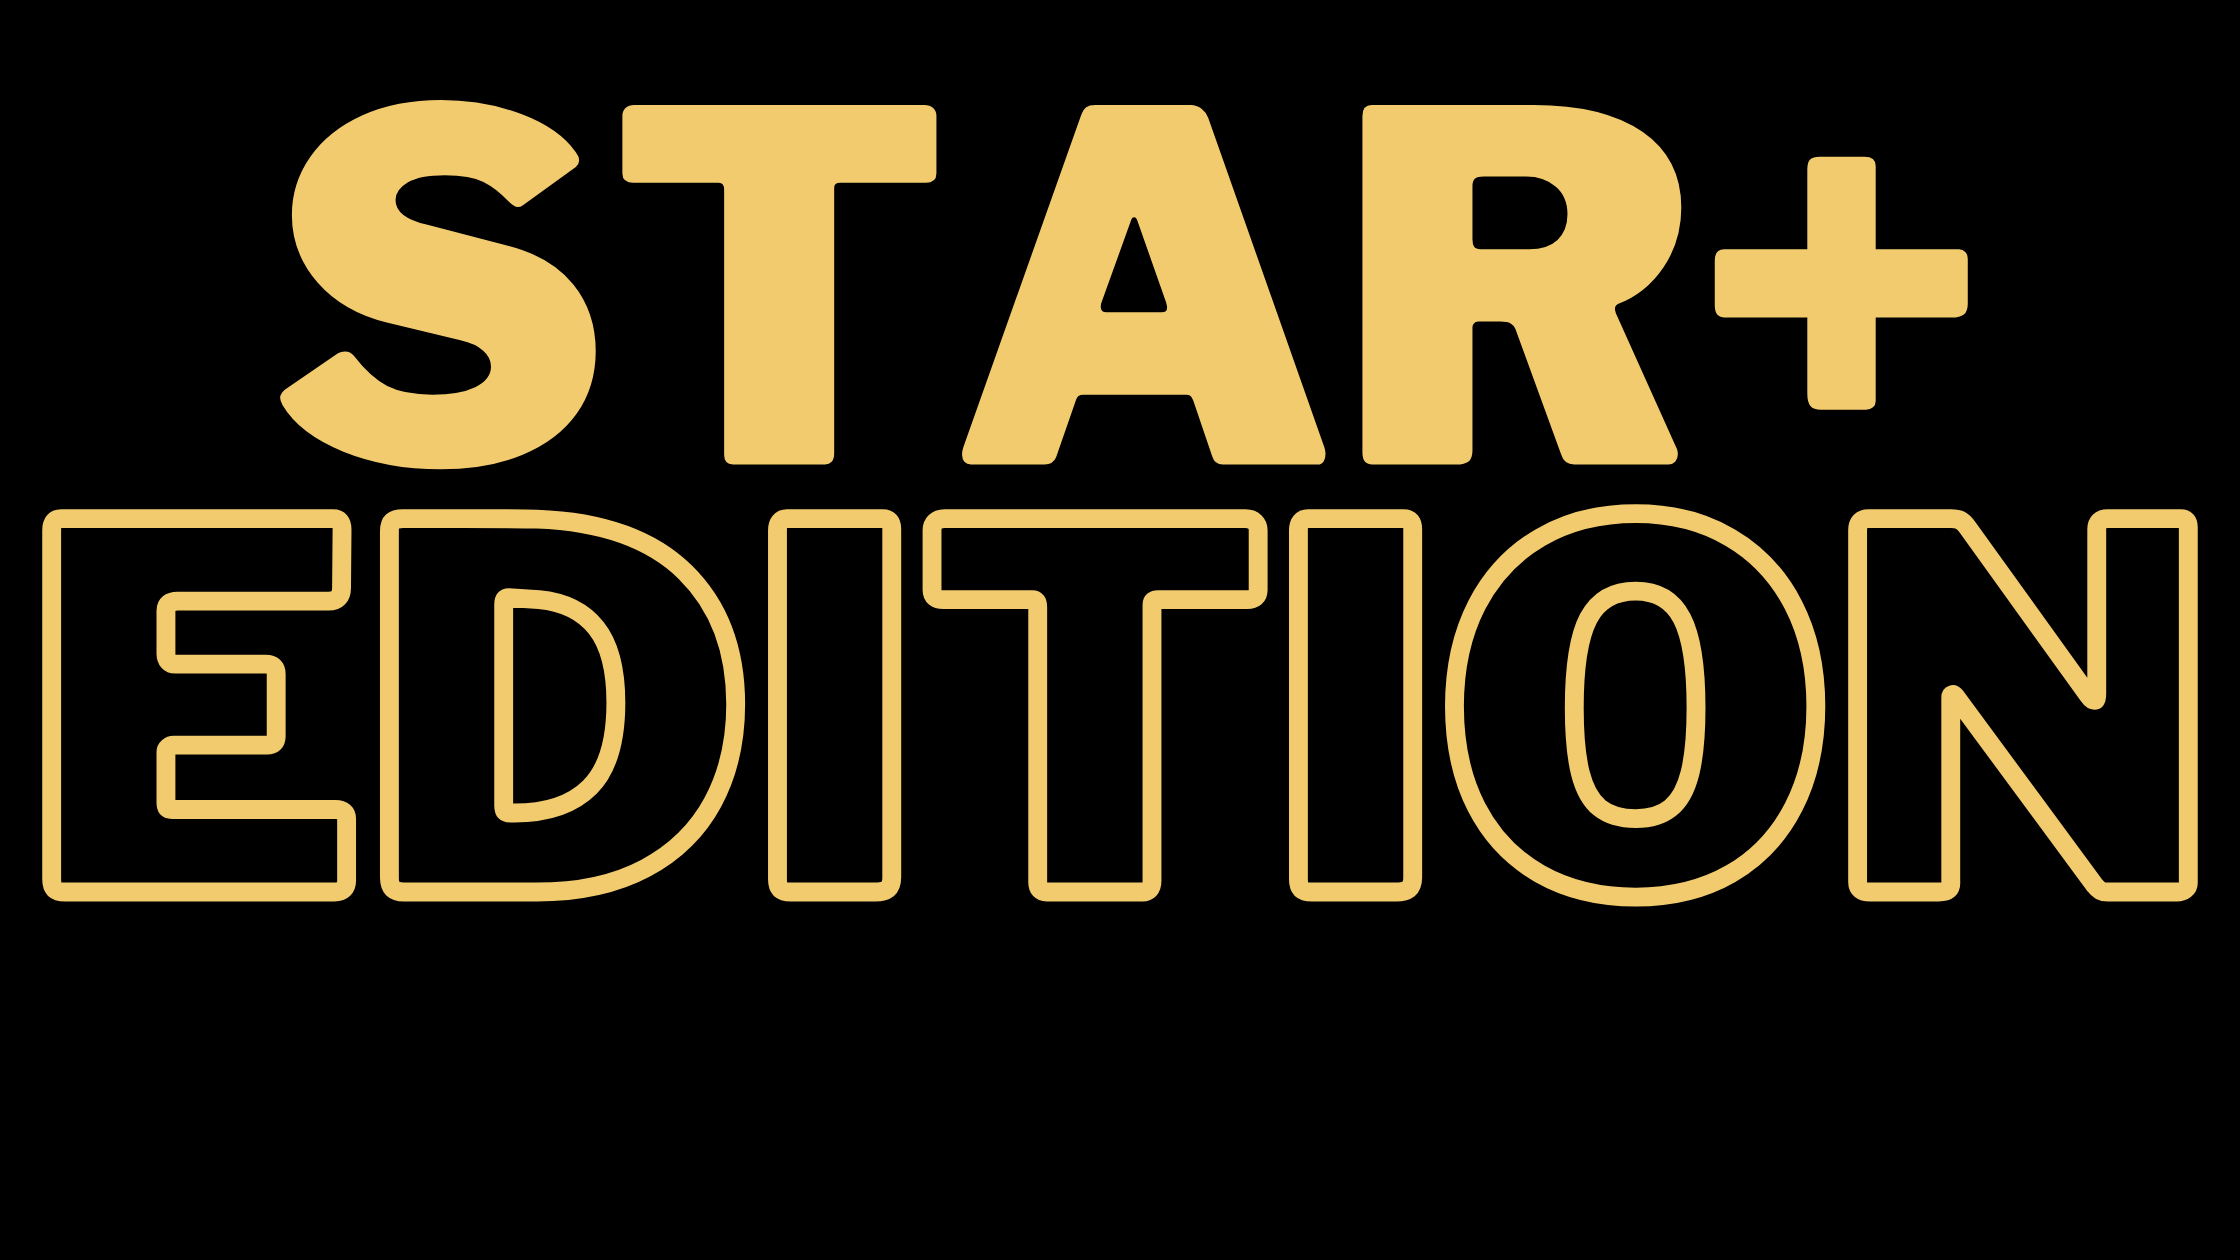 Star+ Edition